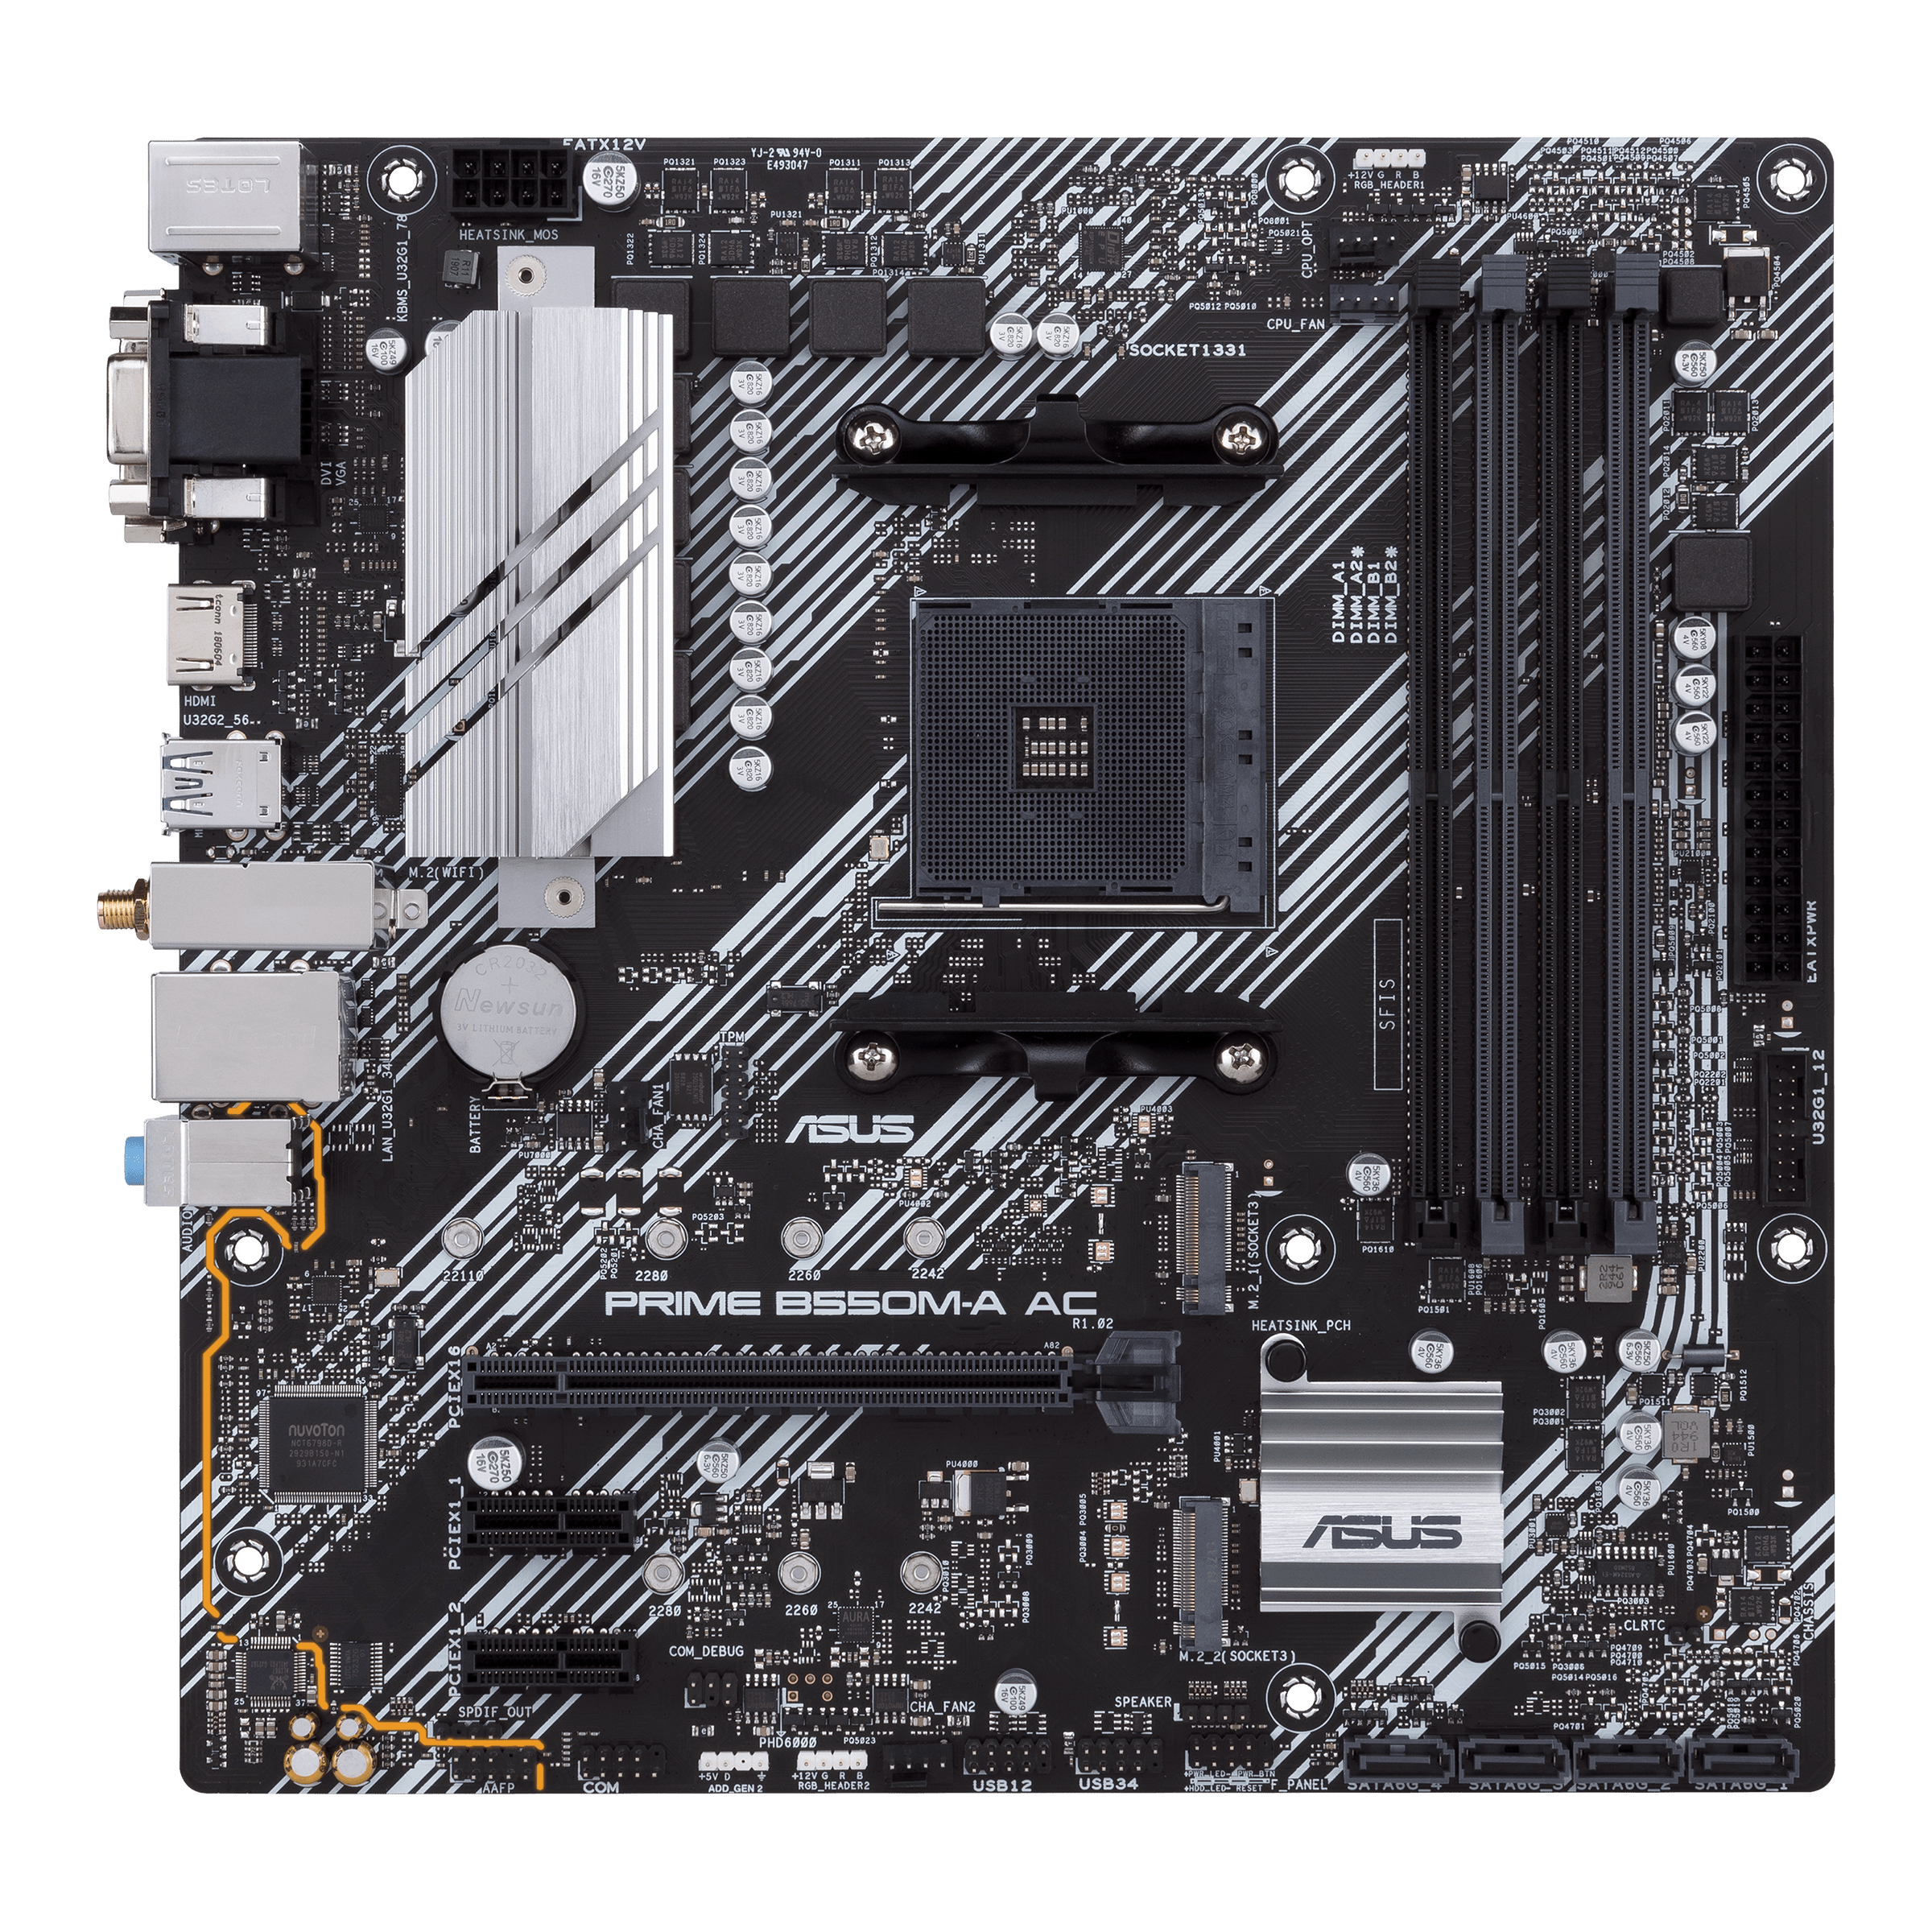 ASUS PRIME B550M-A AC Tarjeta madre AMD AM4 mATX con PCIe 4.0, dual M.2, WiFi, HDMI, D-Sub, DVI, SATA 6 Gbps, puertos USB 3.2 Gen 2 e iluminación Aura